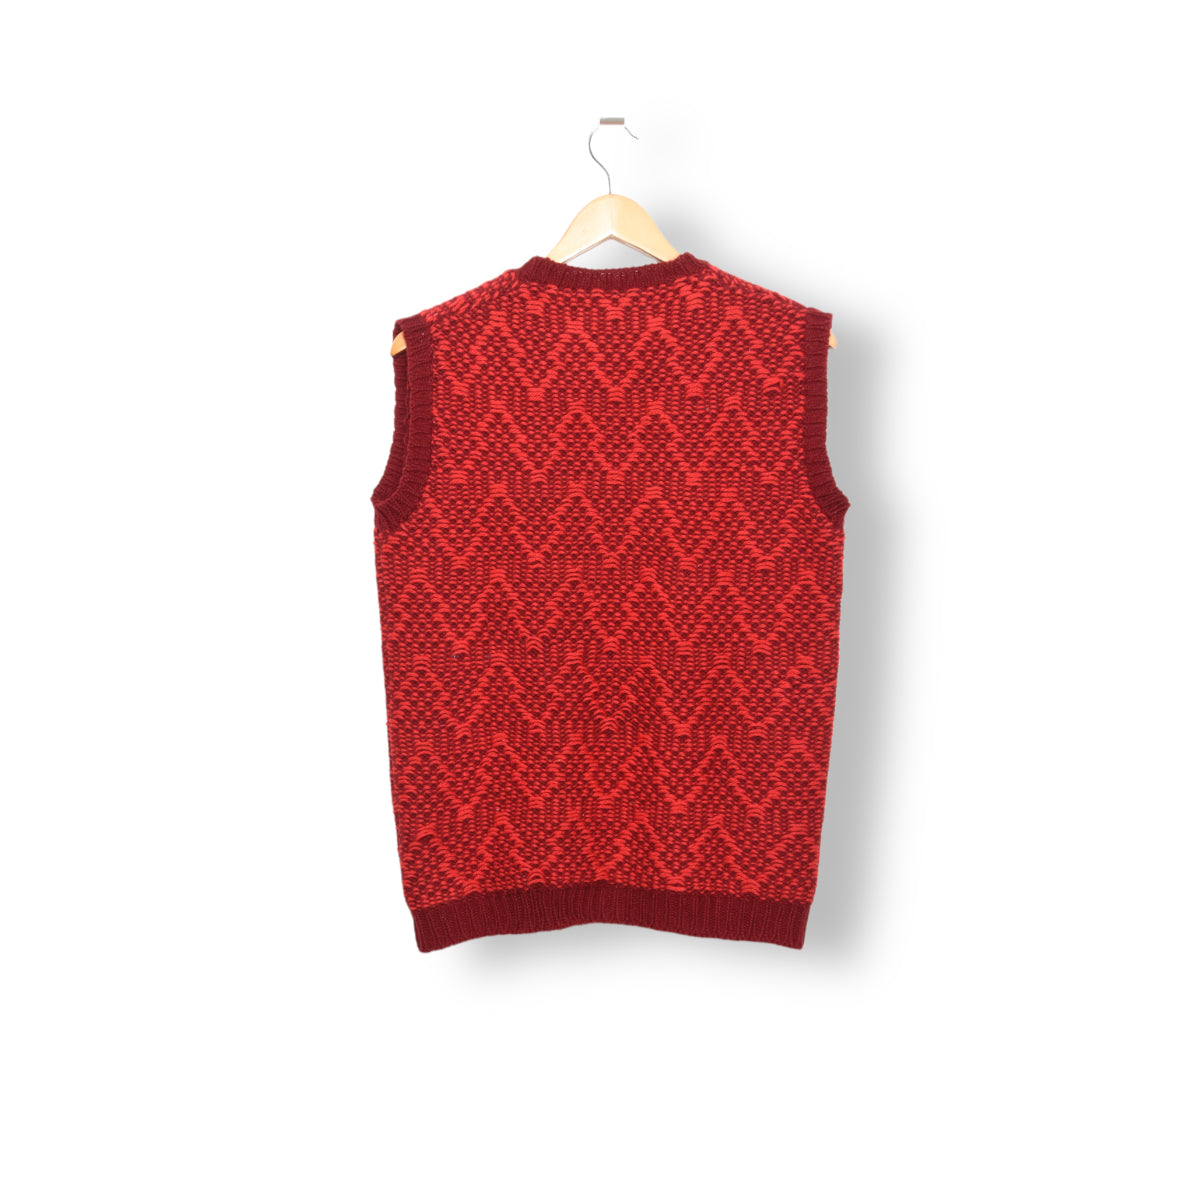 Frank Leder Handknitted Vest red